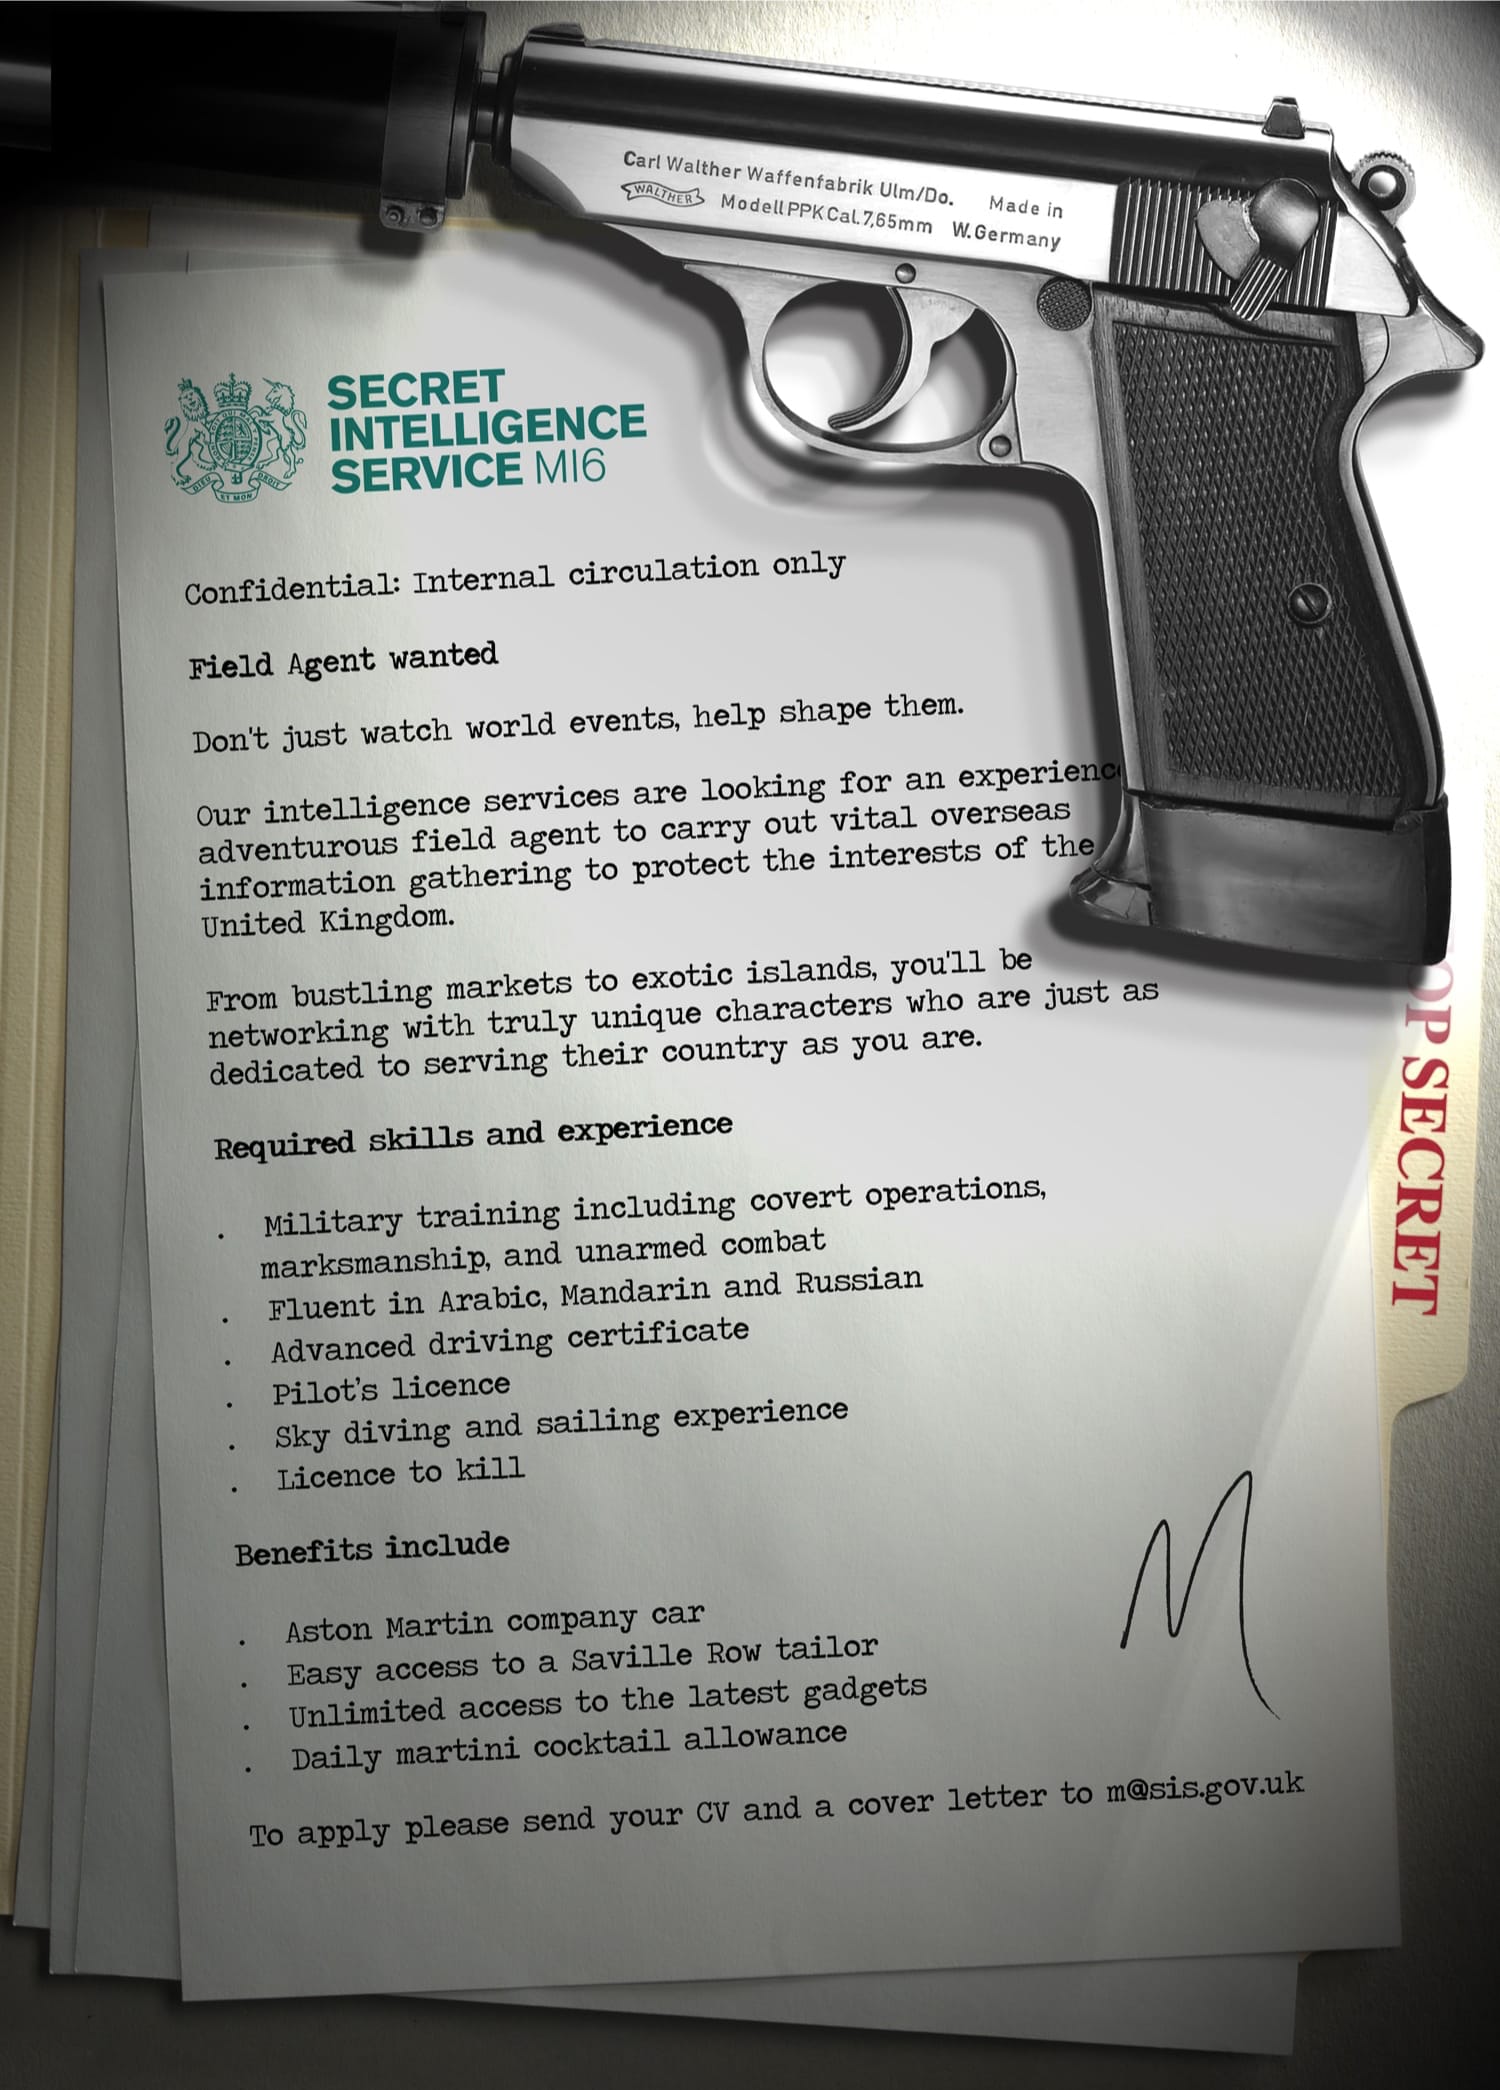 Fictional James Bond recruitment poster - Secret Intelligence Service MI6's internal advertisement for a field agent